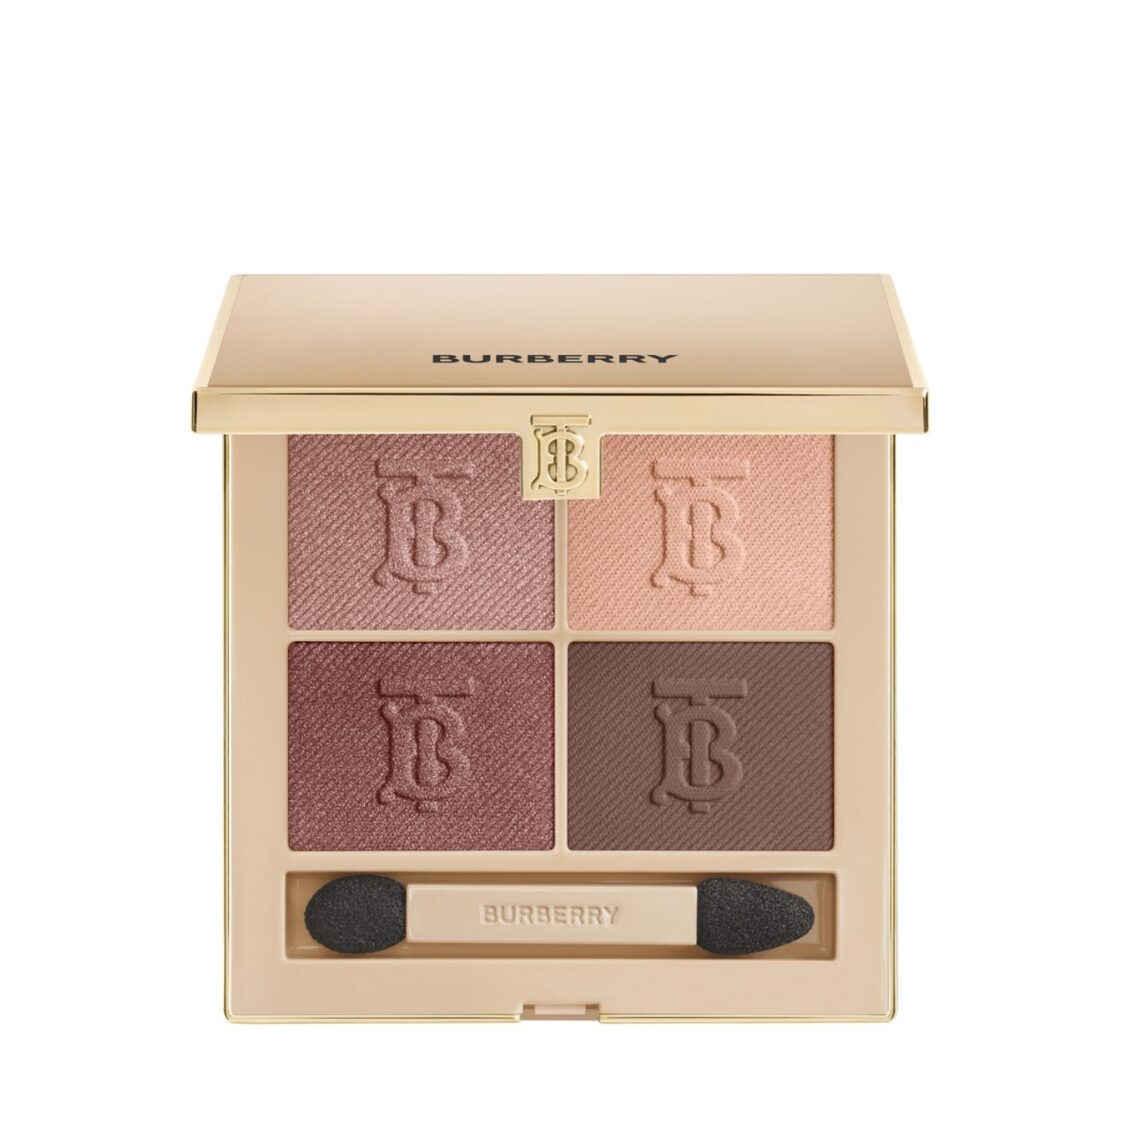 Burberry Beauty Ultimate Lift Mascara-02 Brown (Makeup,Eye,Mascara)